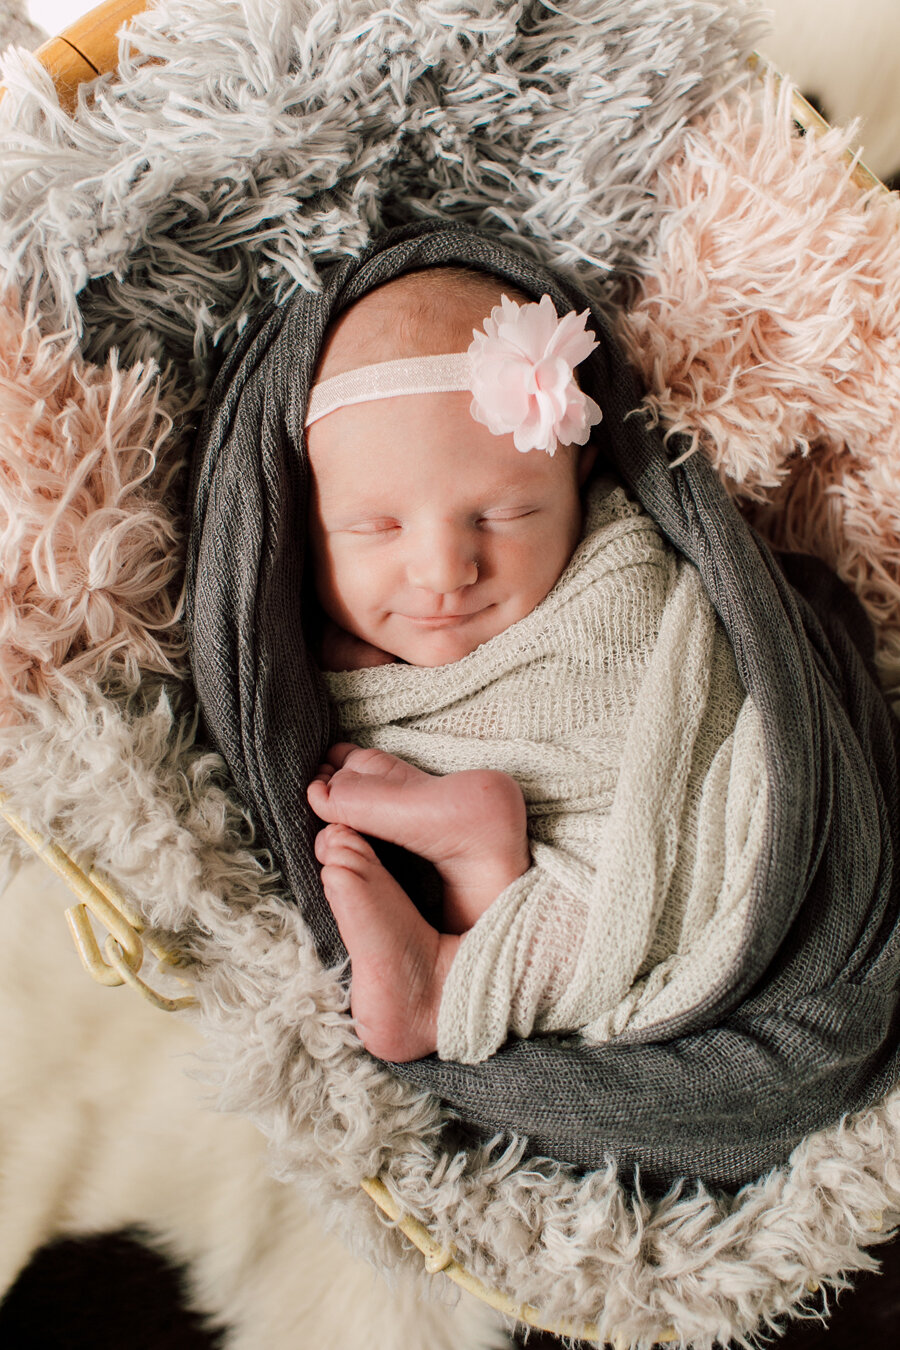 Bellingham Newborn Photographer, Katheryn Moran, baby Rae Lynn